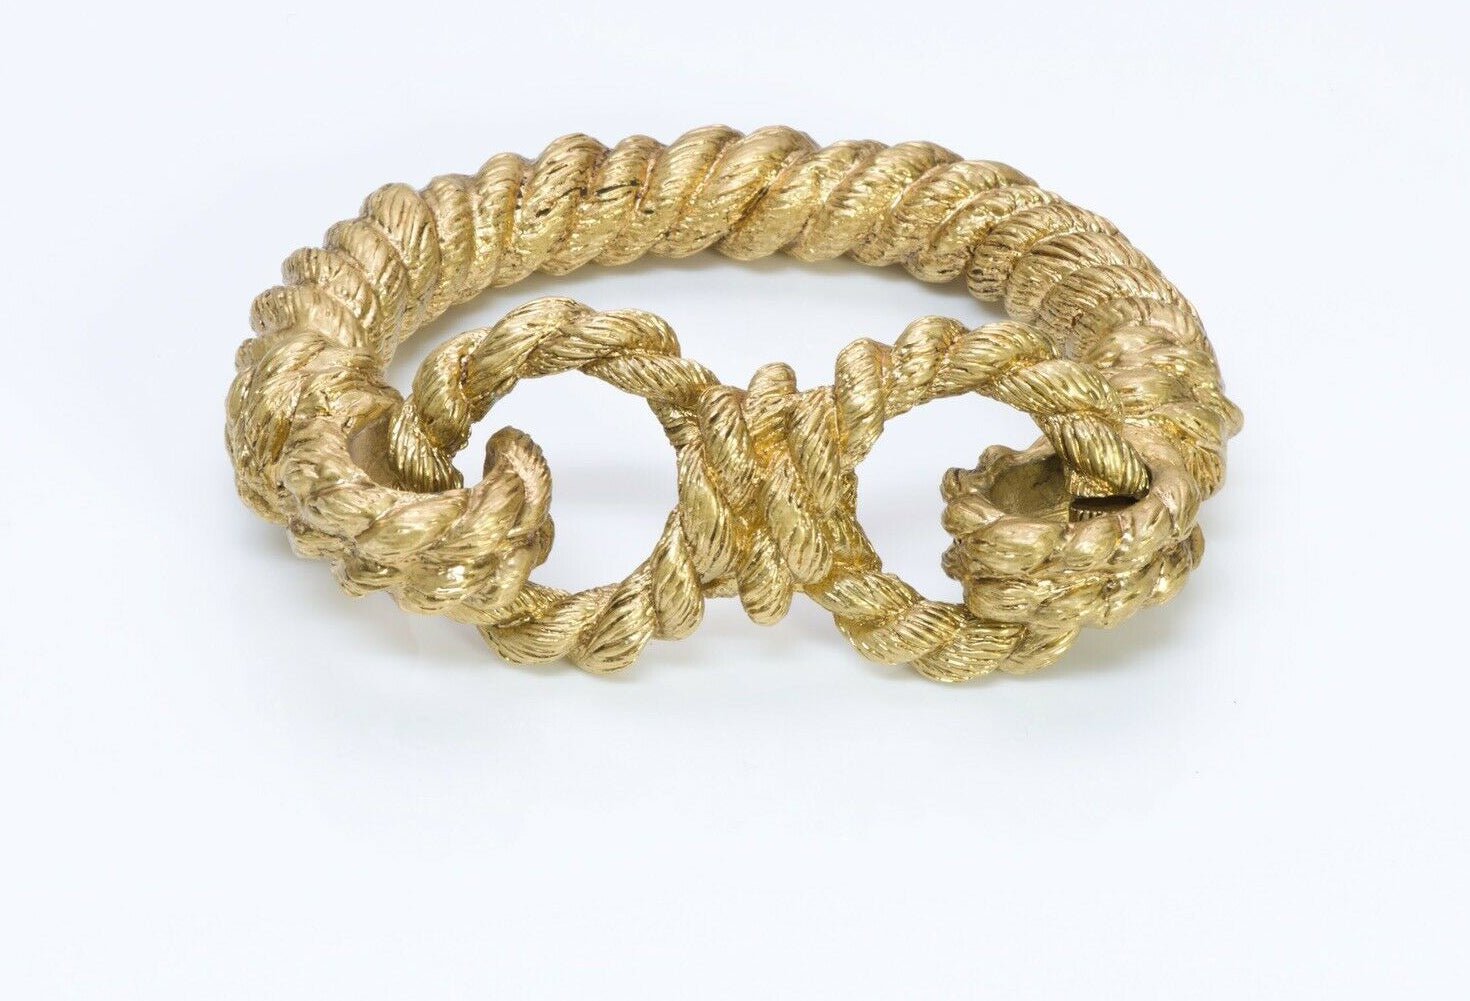 Nina Ricci Paris Infinity Rope Cuff Bracelet